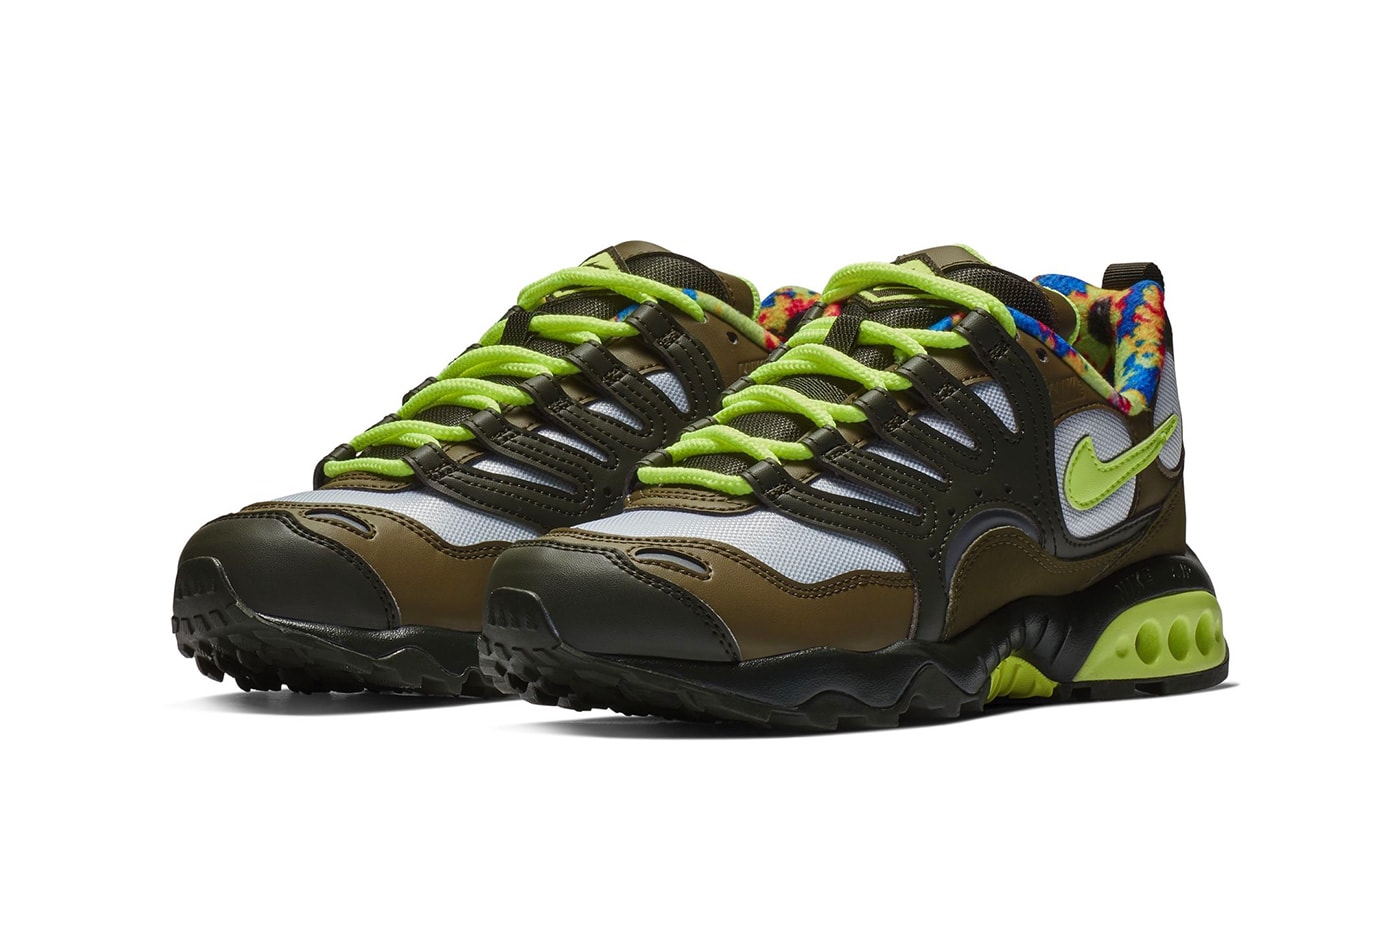 Nike Air Terra Humara '18 "Olive/Volt Glow" Floral lining sneaker release date women's price colorway